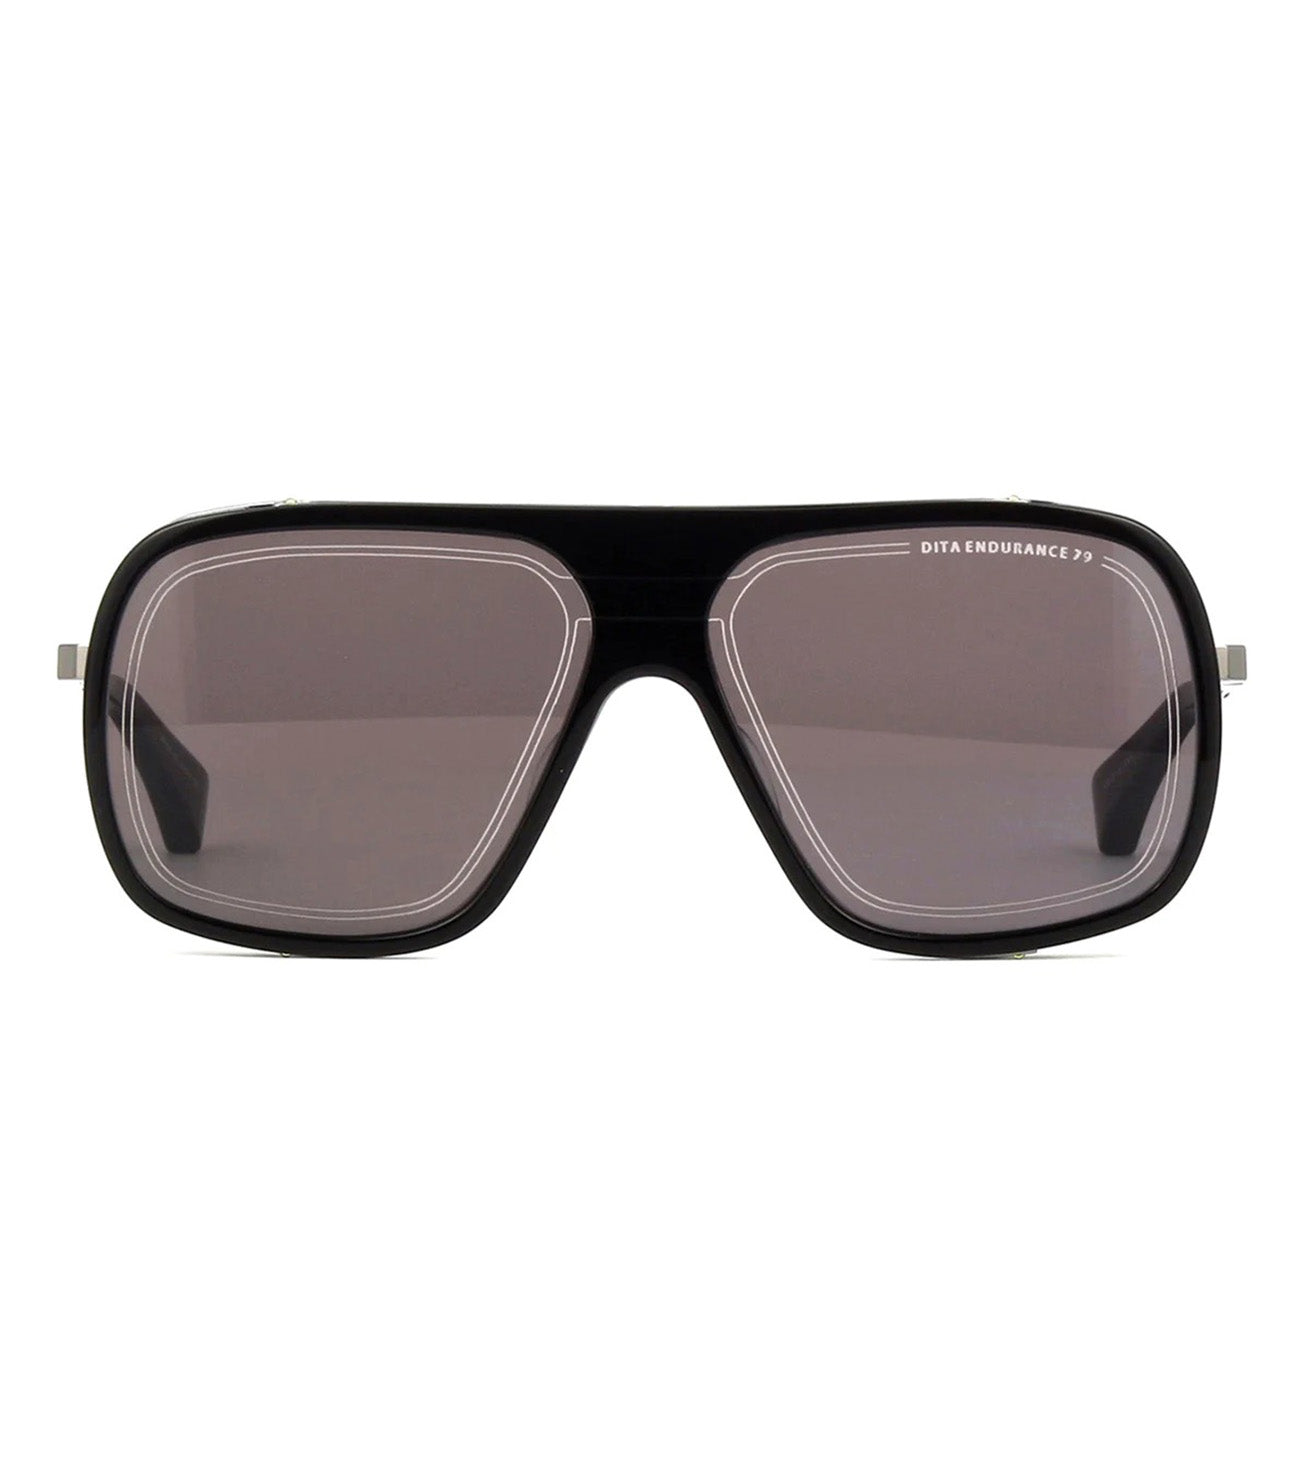 Dita Endurance 79 Unisex Dark Grey Aviator Sunglasses